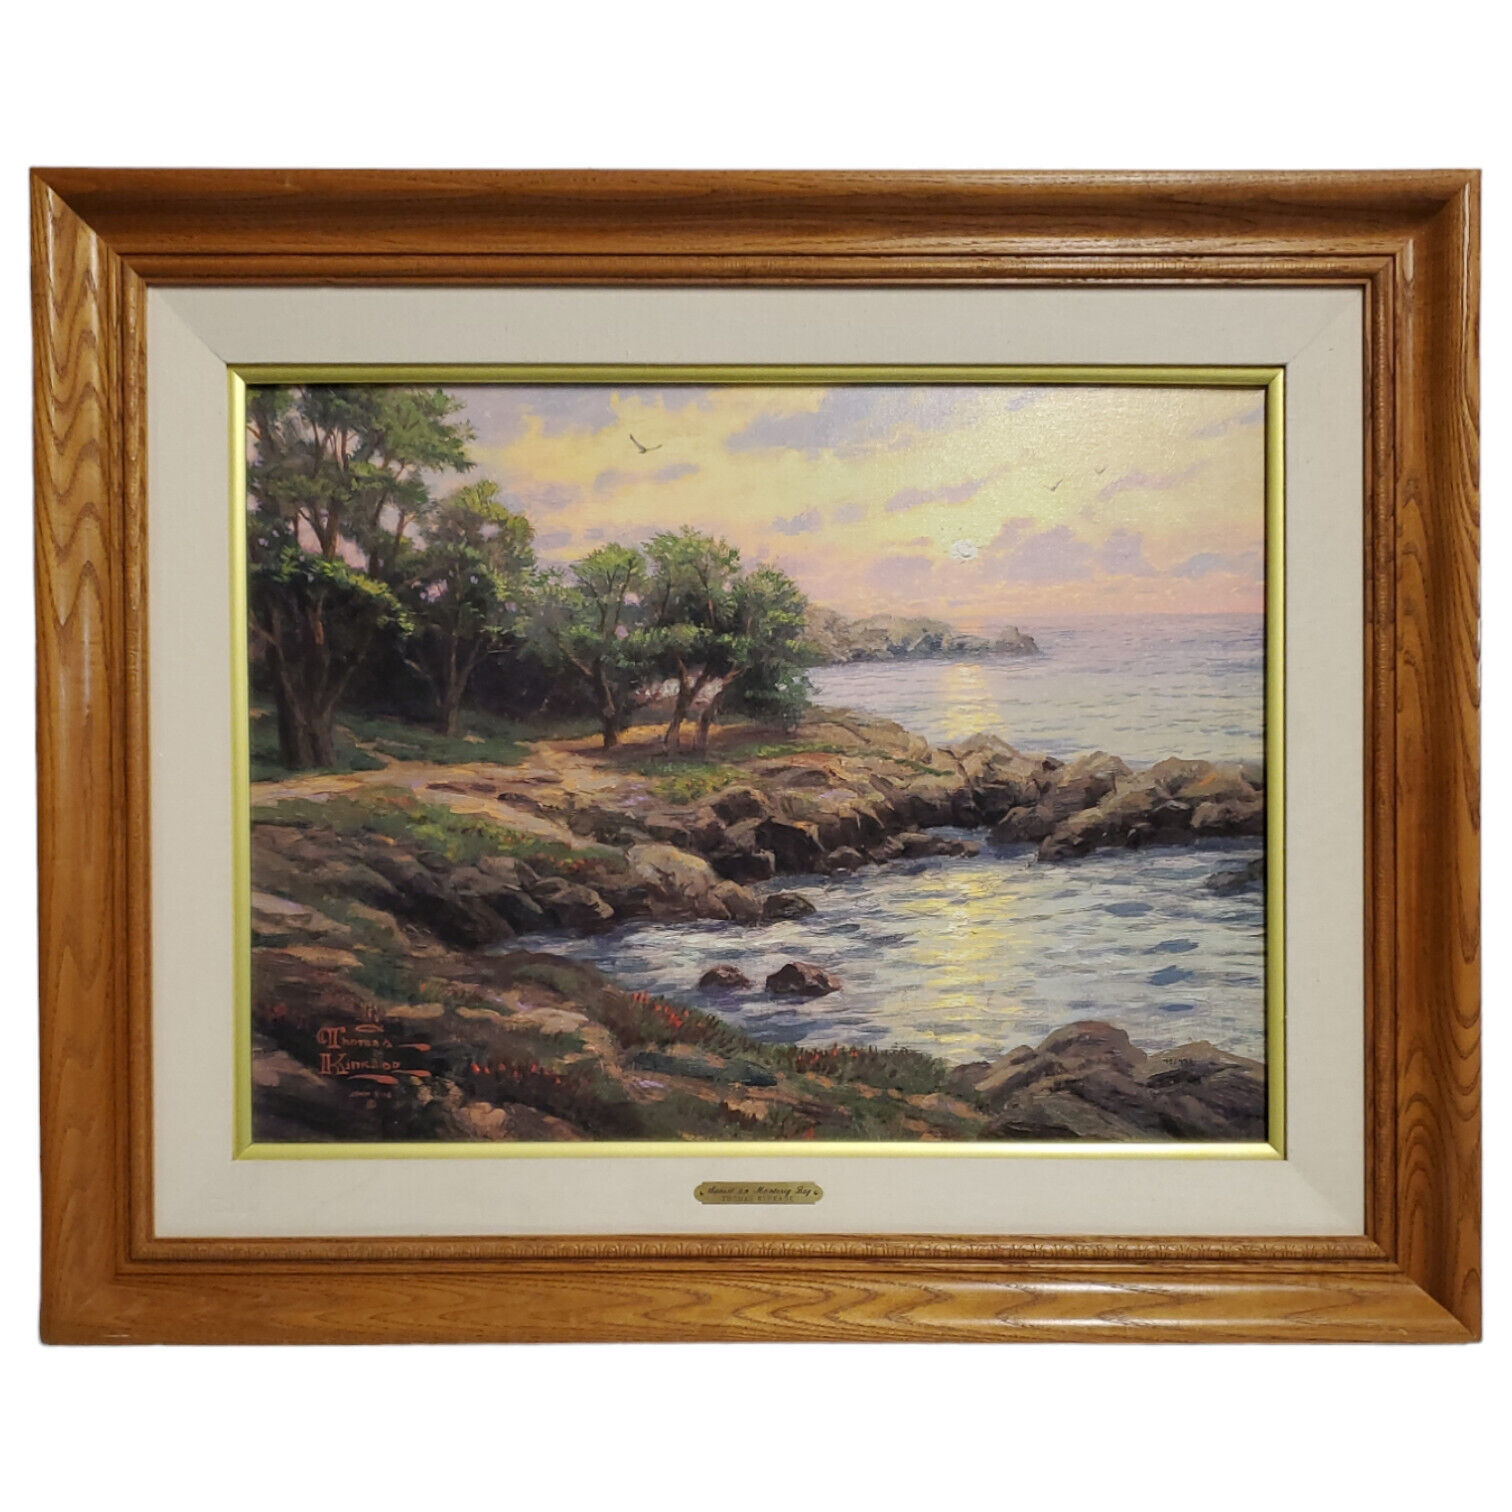 Signed Thomas Kinkade Sunset on Monterey Bay Limited Edition Canvas 18x24 Framed